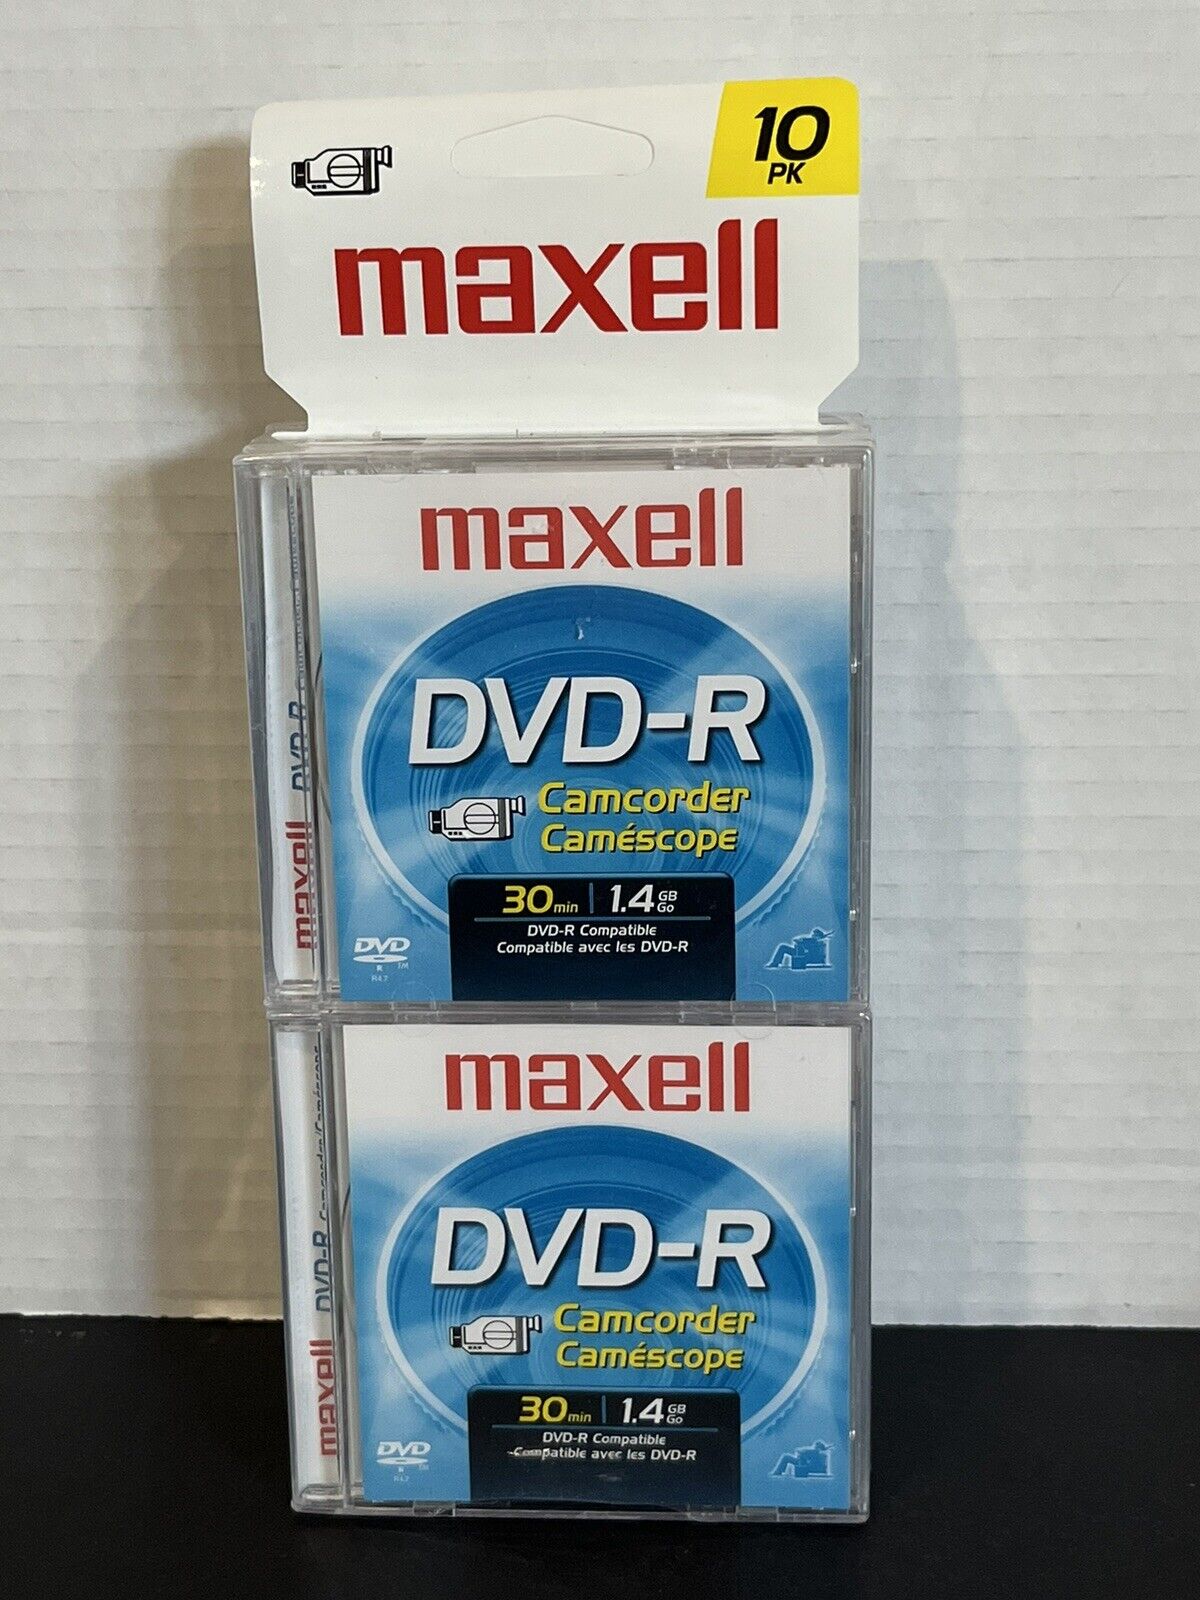 10 Maxell DVD-R CAMCORDER DVD-R  (10 PACK) 30 min 1.4 GB